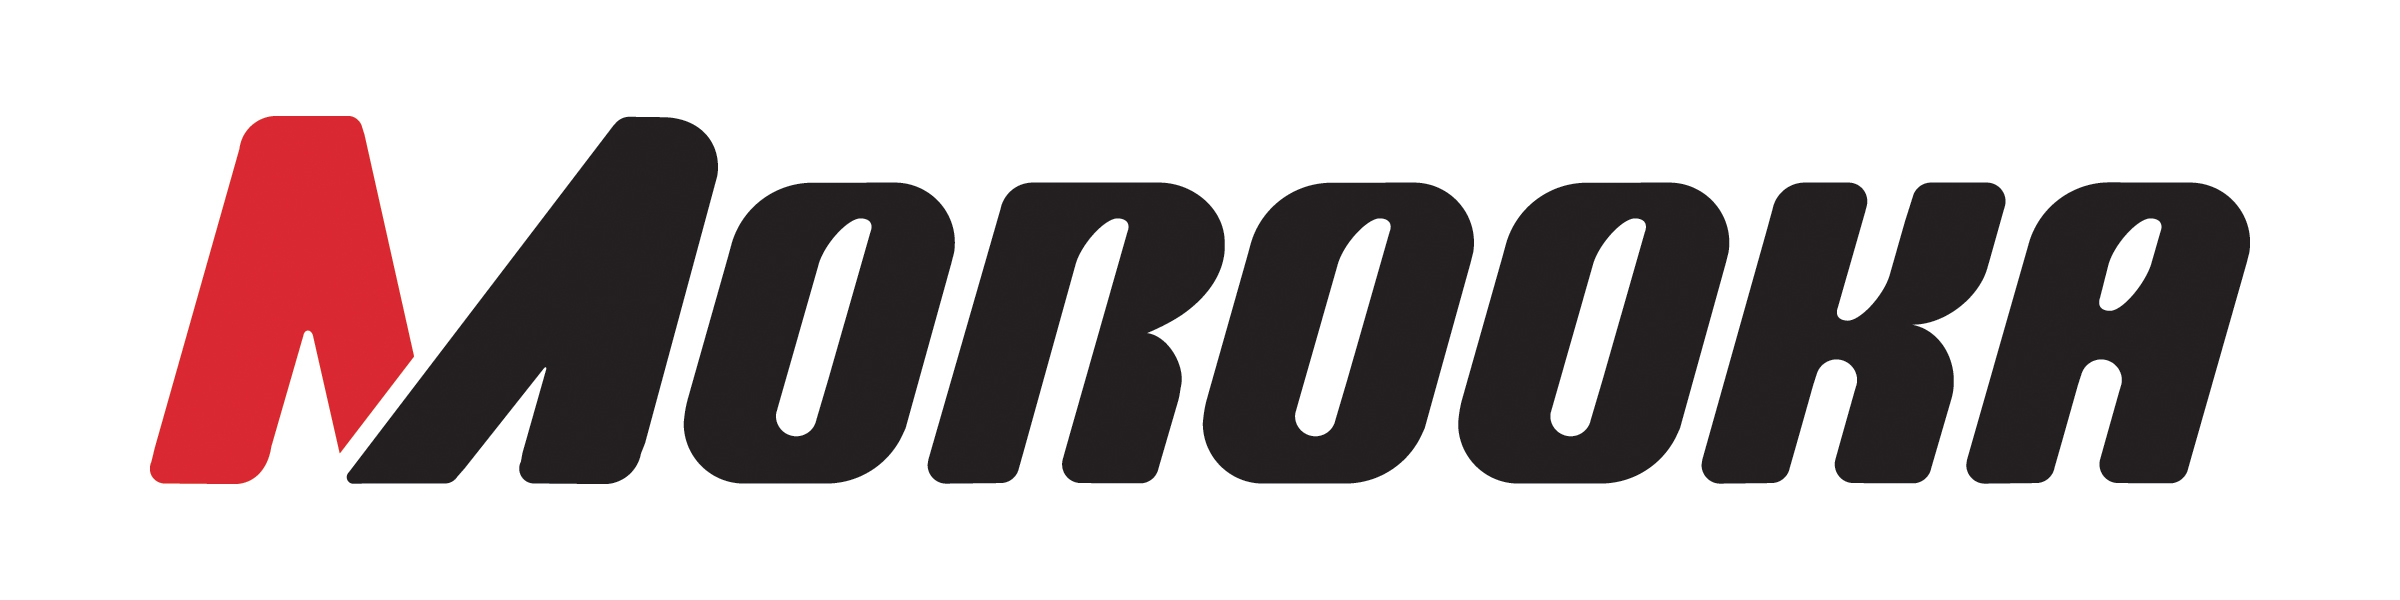 Morooka_logo.jpg